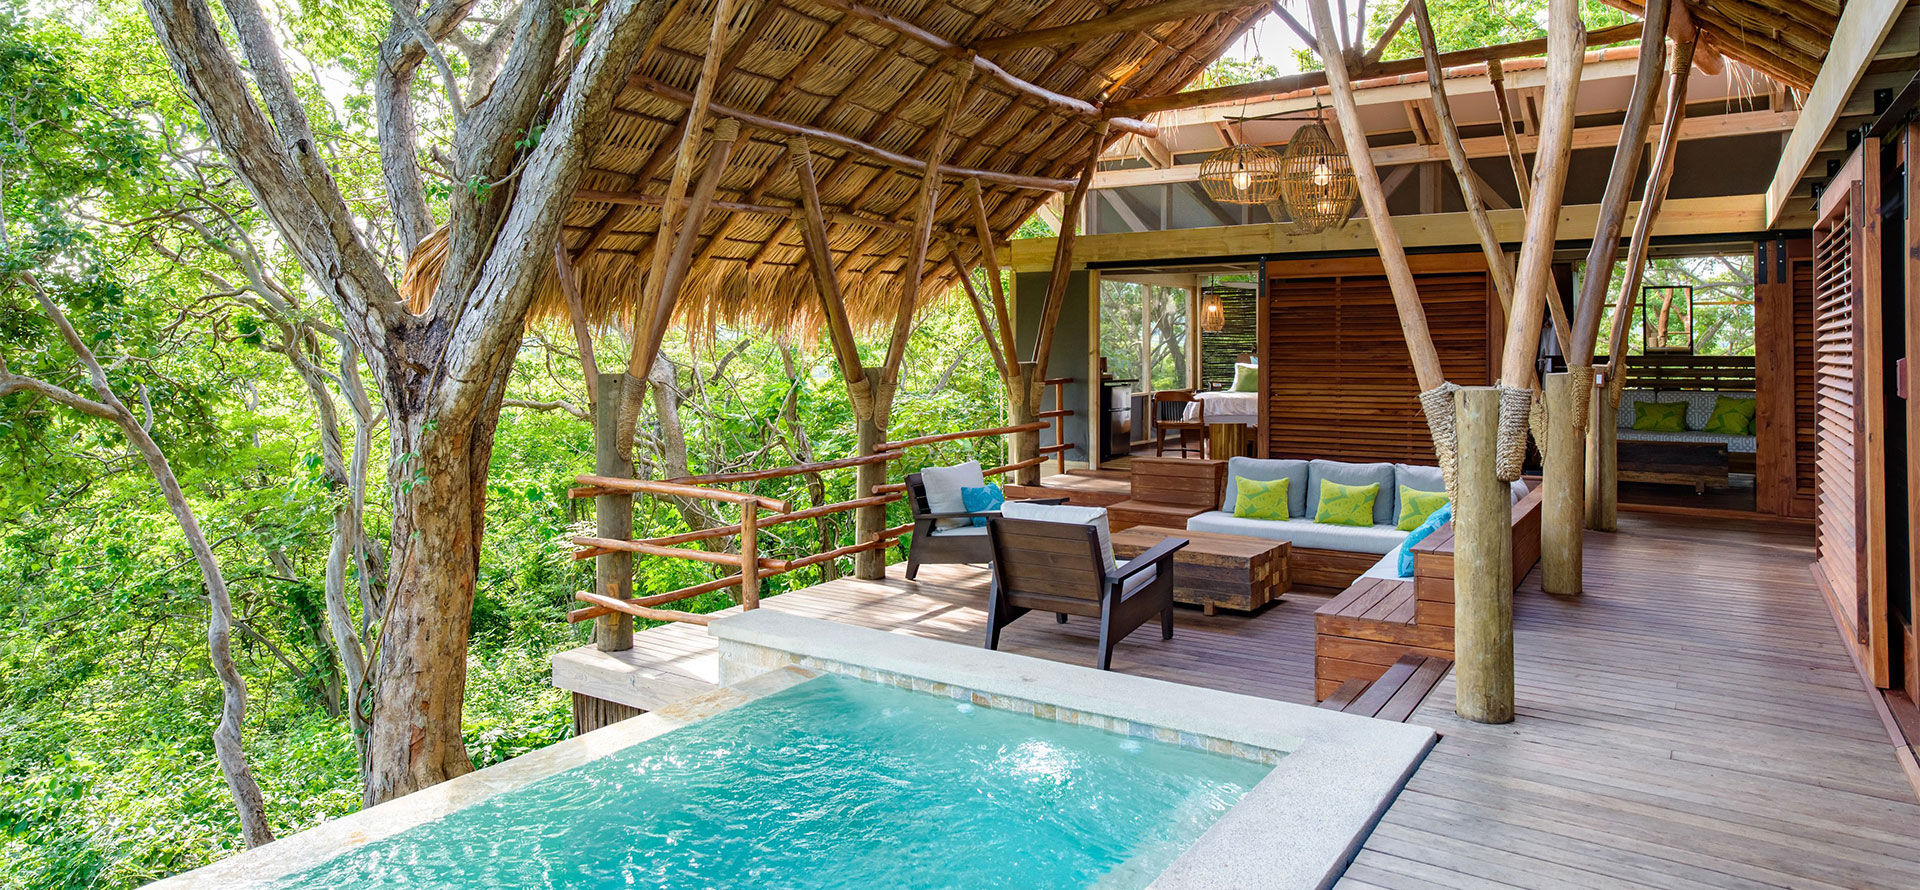 Nicaragua all inclusive resort lounge zone.